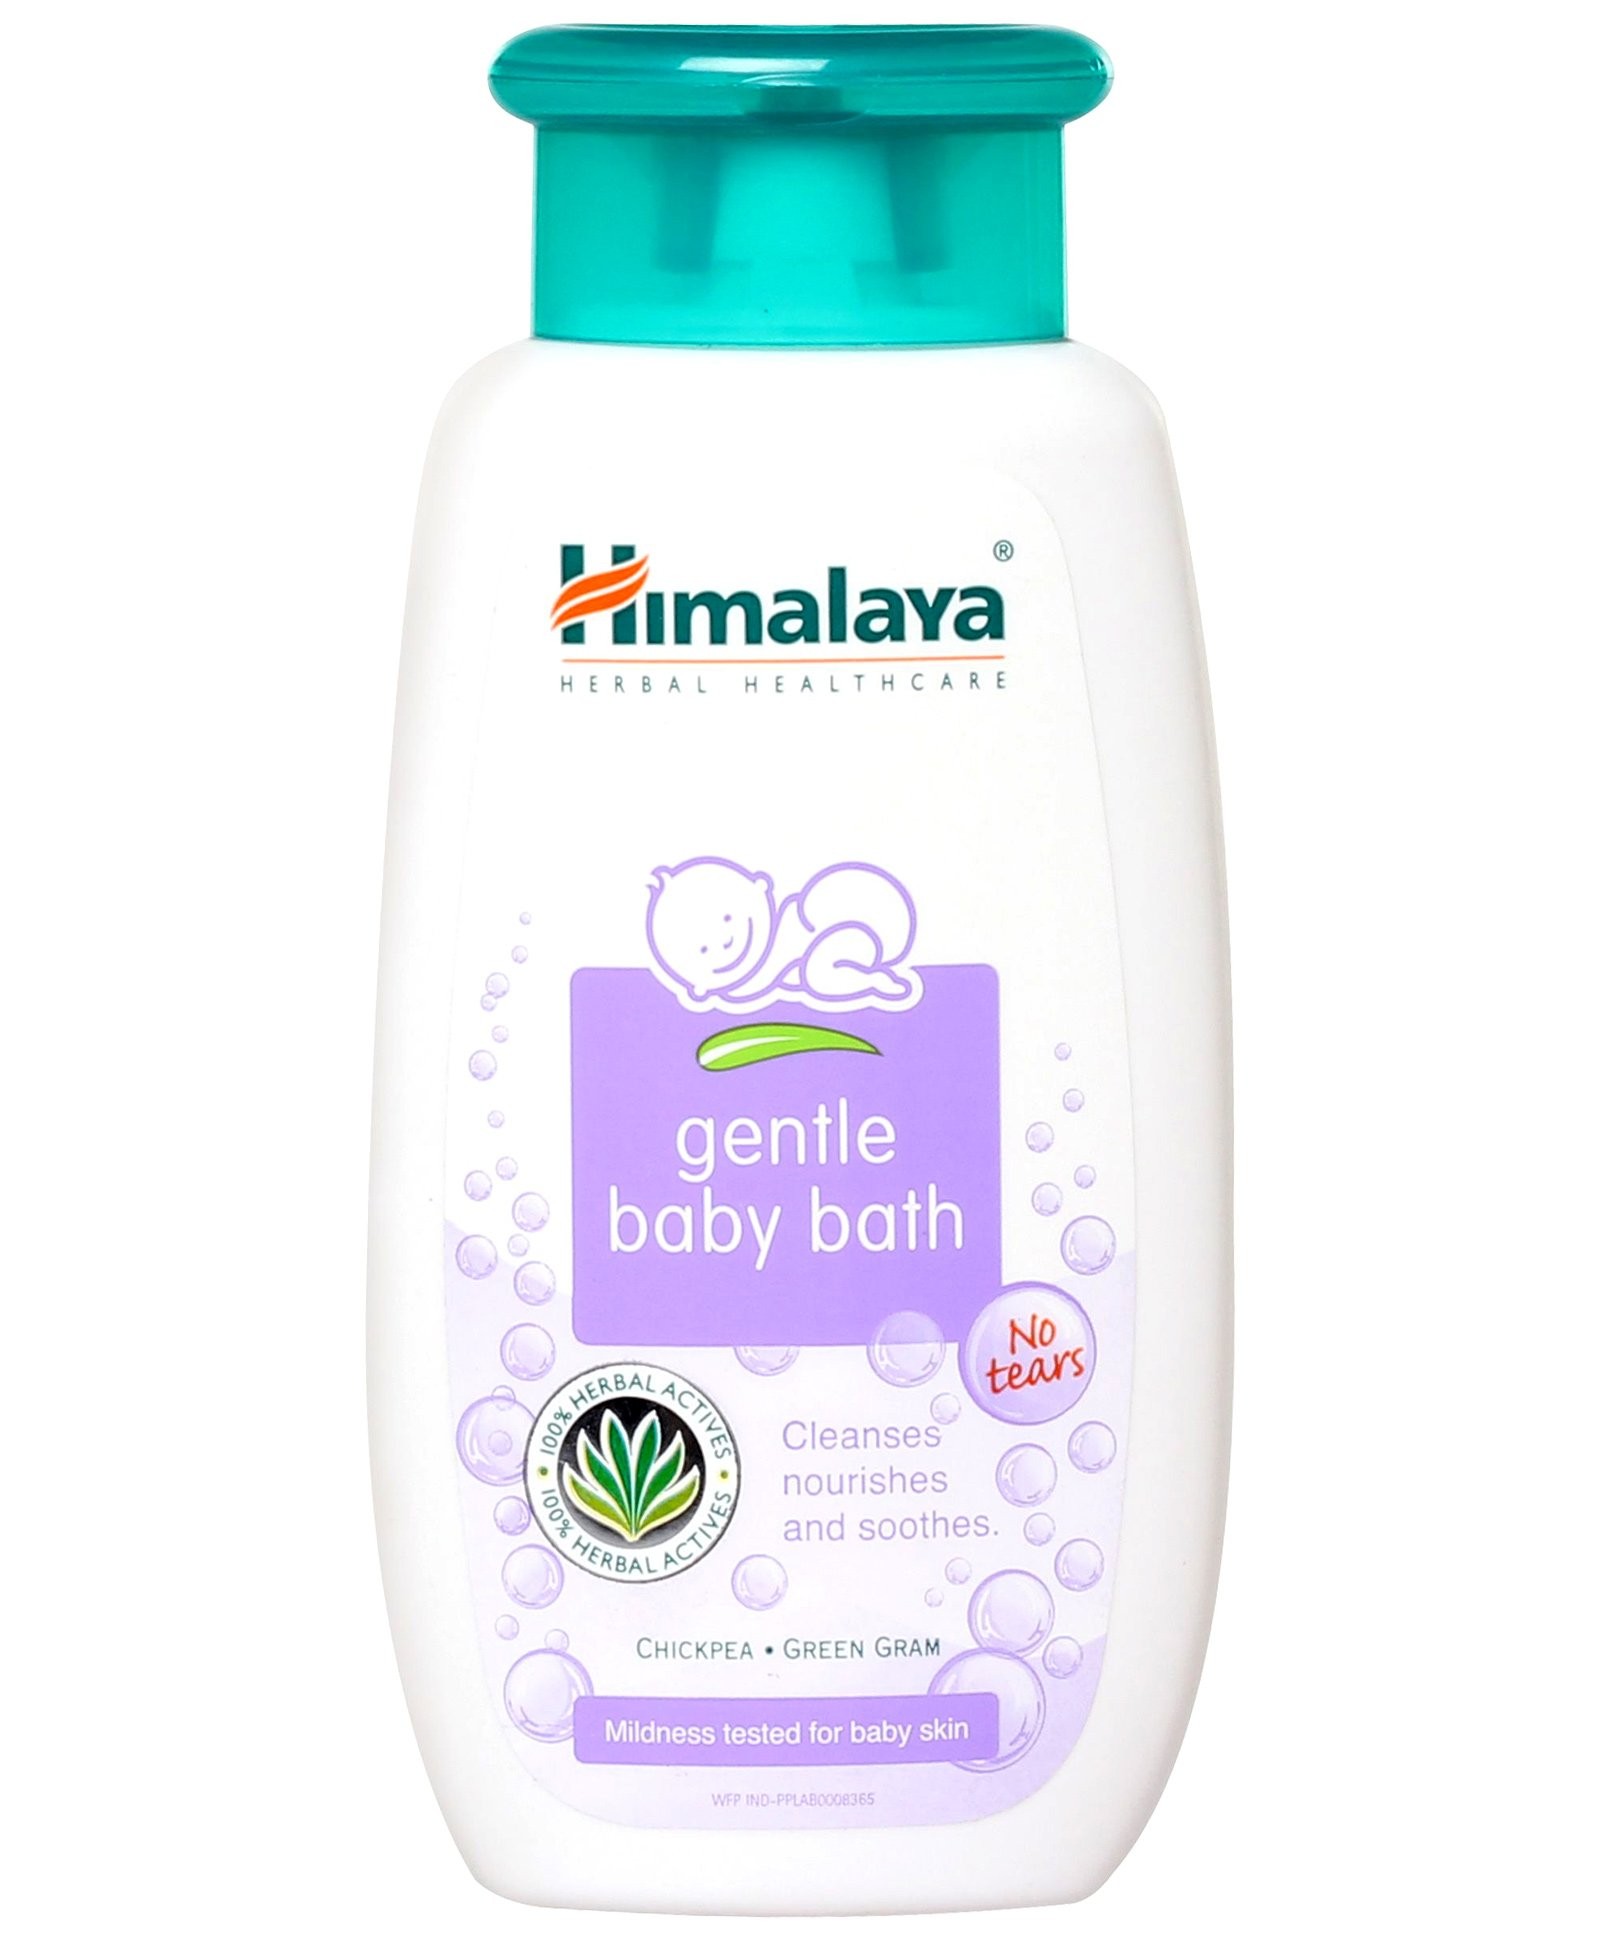 Himalaya Gentle Baby Bath - Chickpea & Green Gram